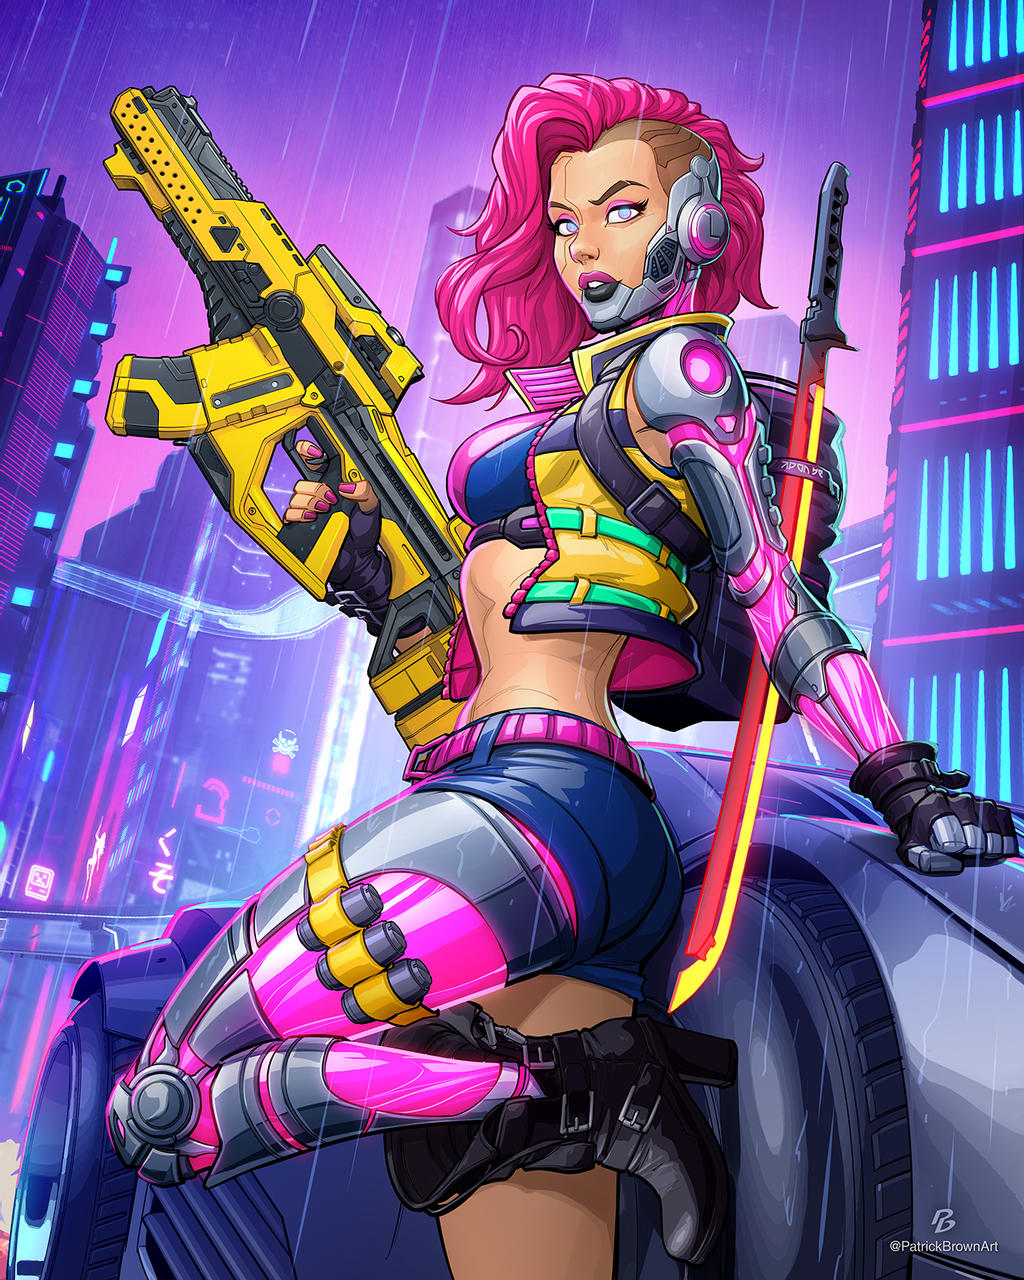 General 1024x1280 cyberpunk artwork science fiction science fiction women colorful women girls with guns